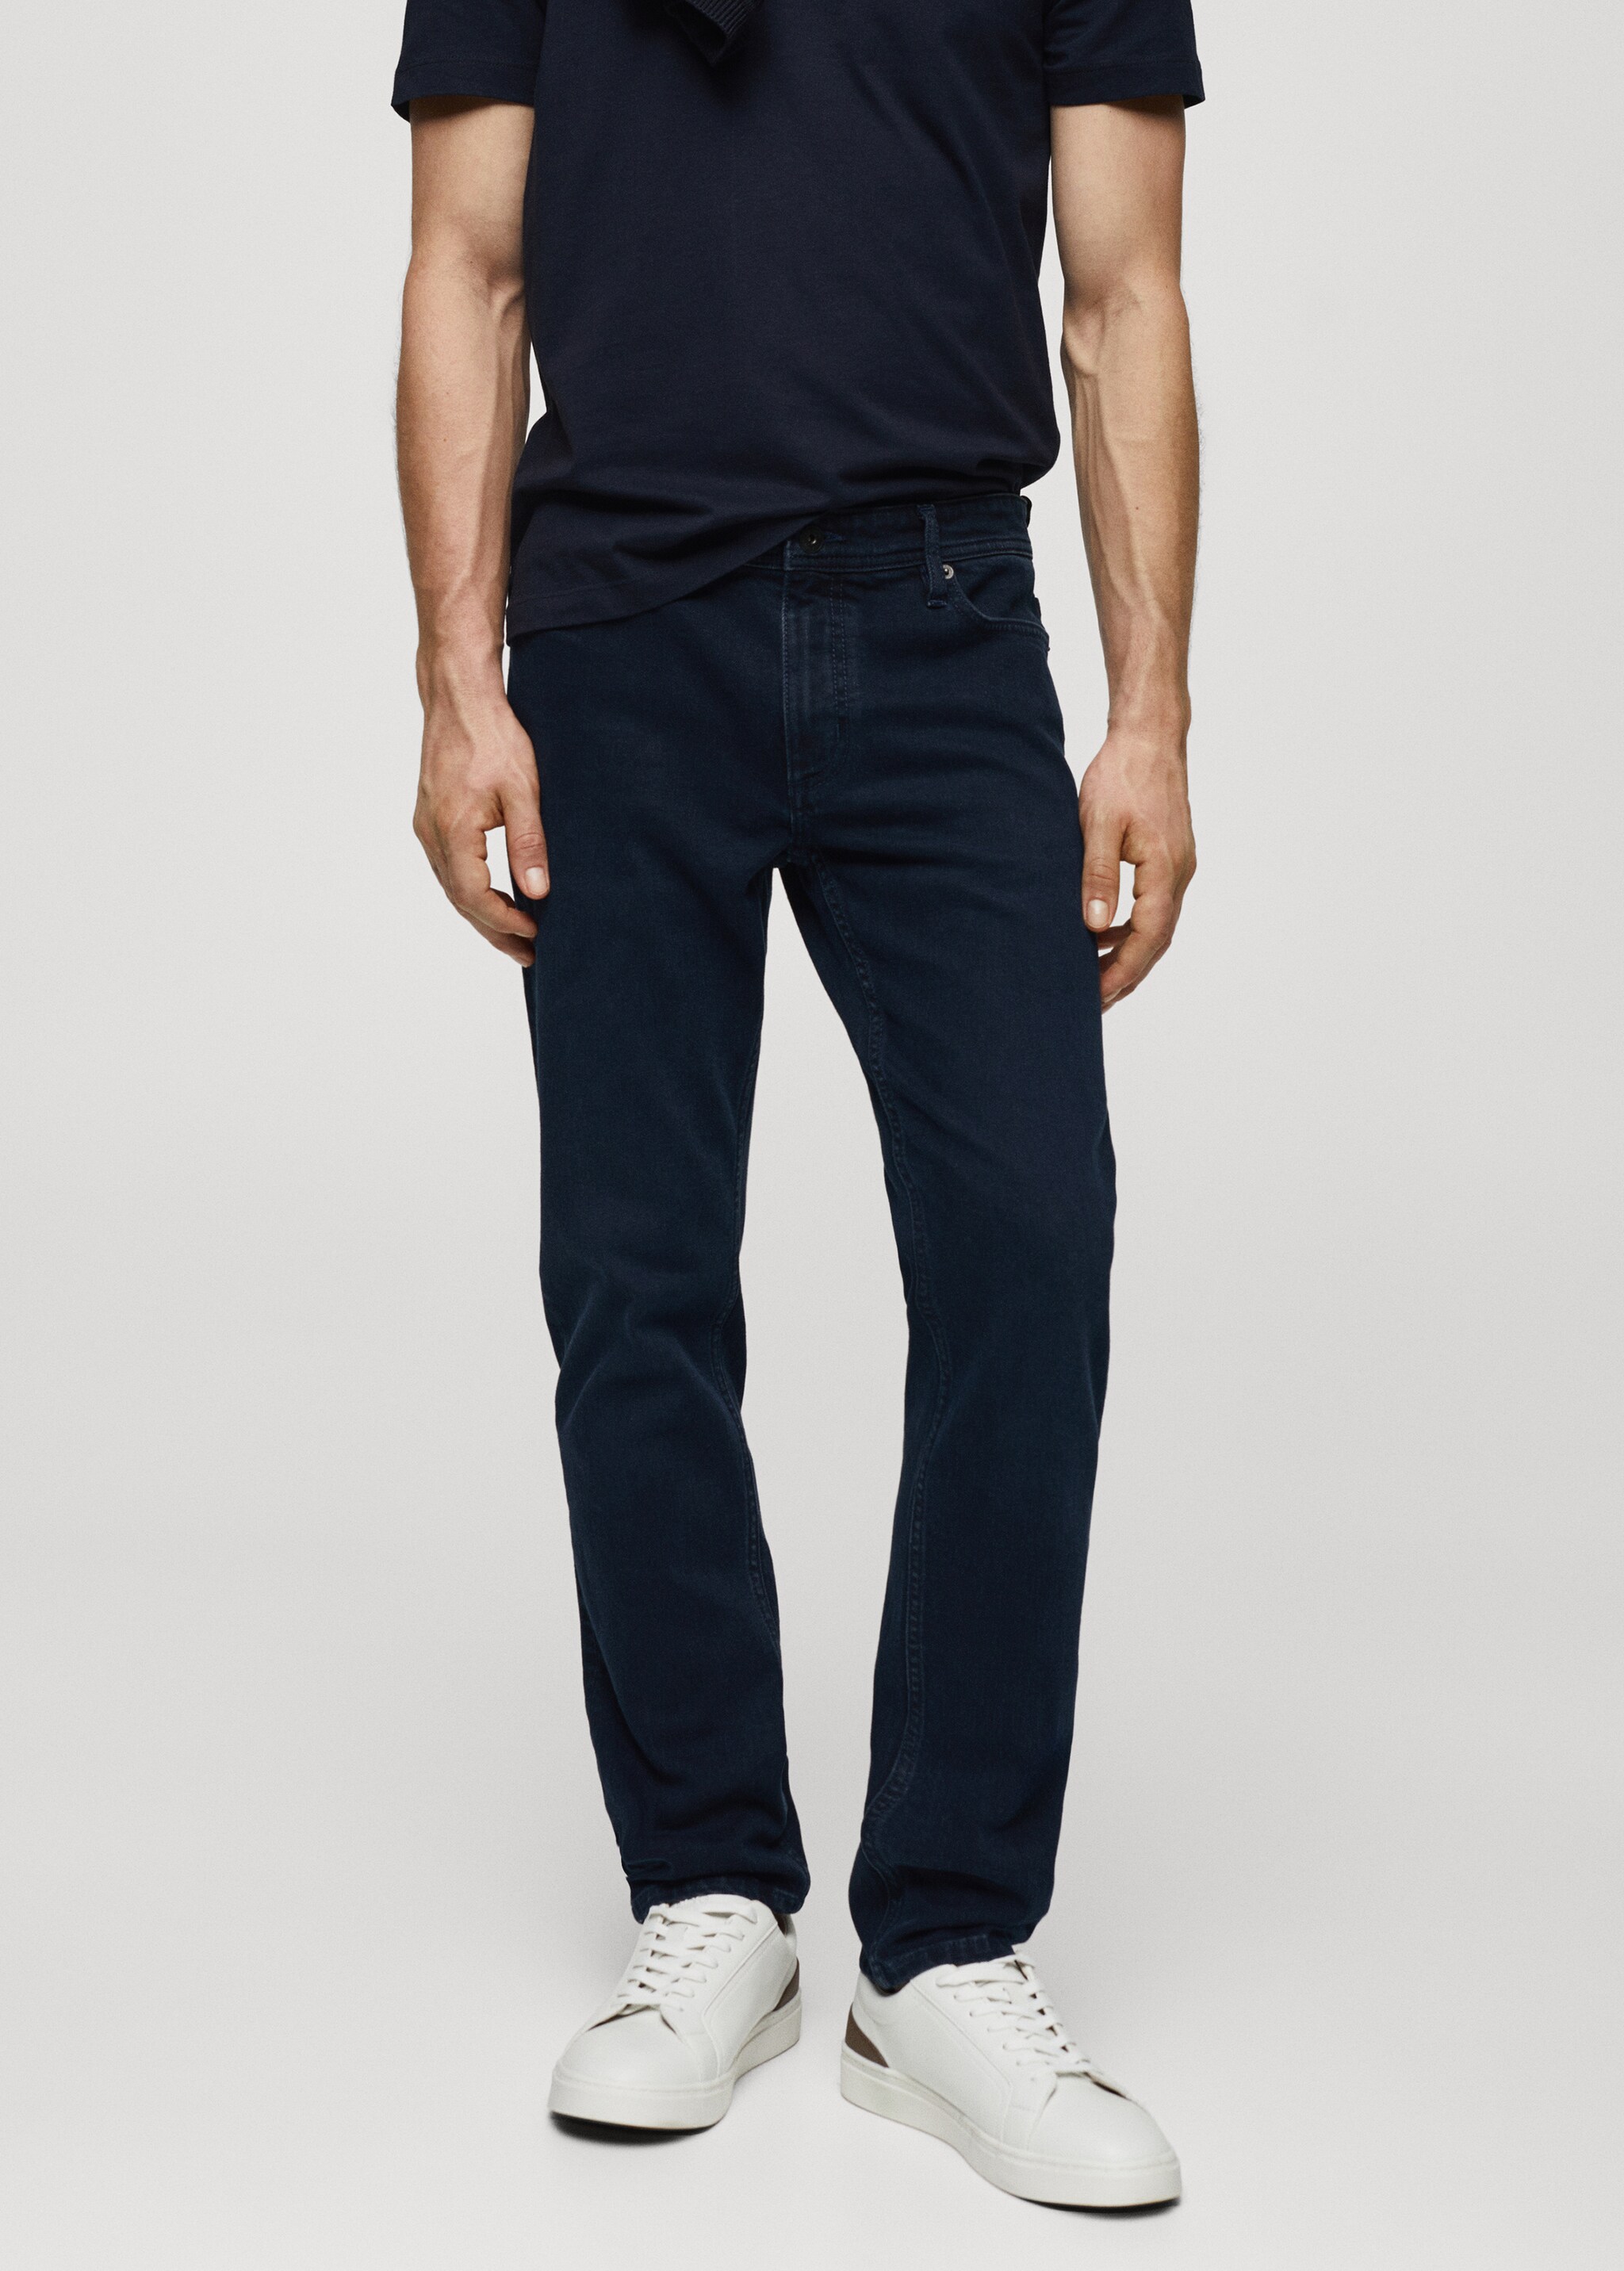 Jan slim-fit jeans - Medium plane